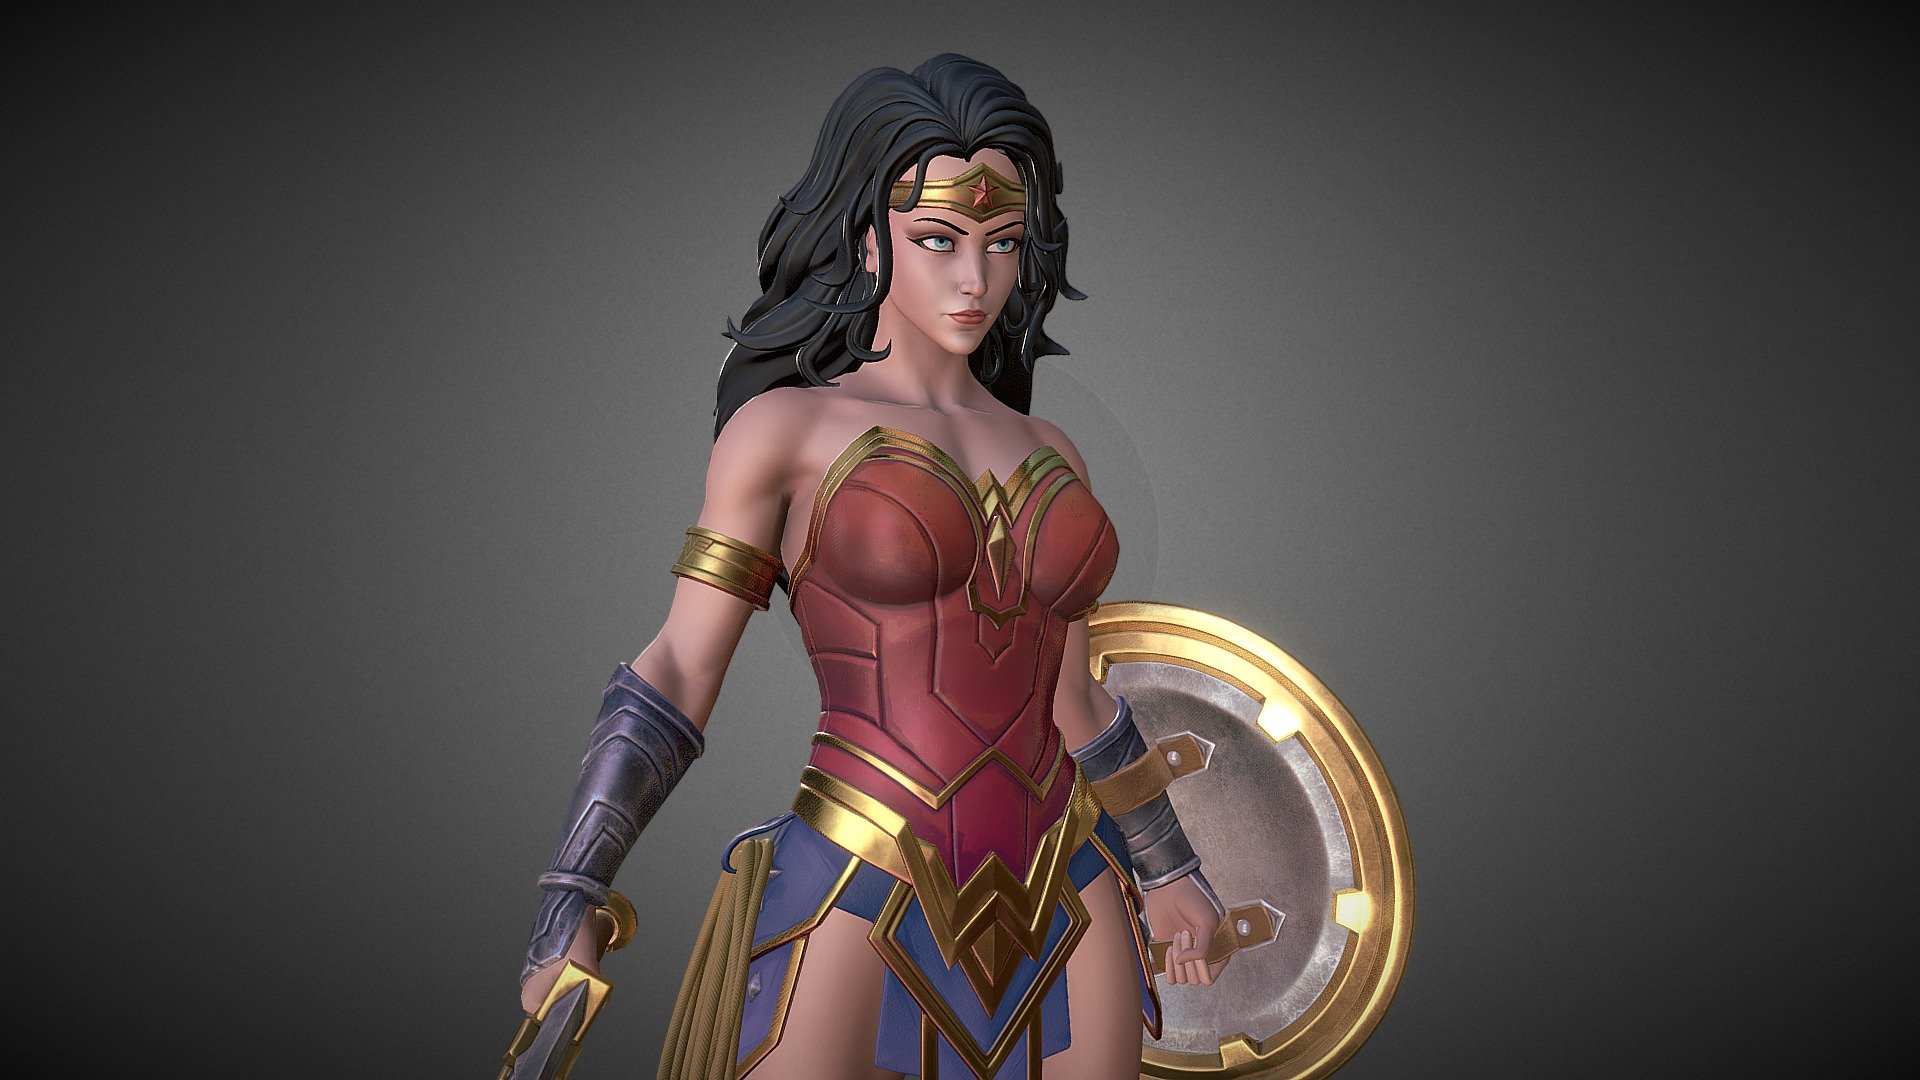 Wonder Woman model ready for Game
4k texture for 4 set Amor,Hair,Body,Weapon
Tris 57K 
Rigged - WonderWoman - 3D model by sonnguyenart 3d model